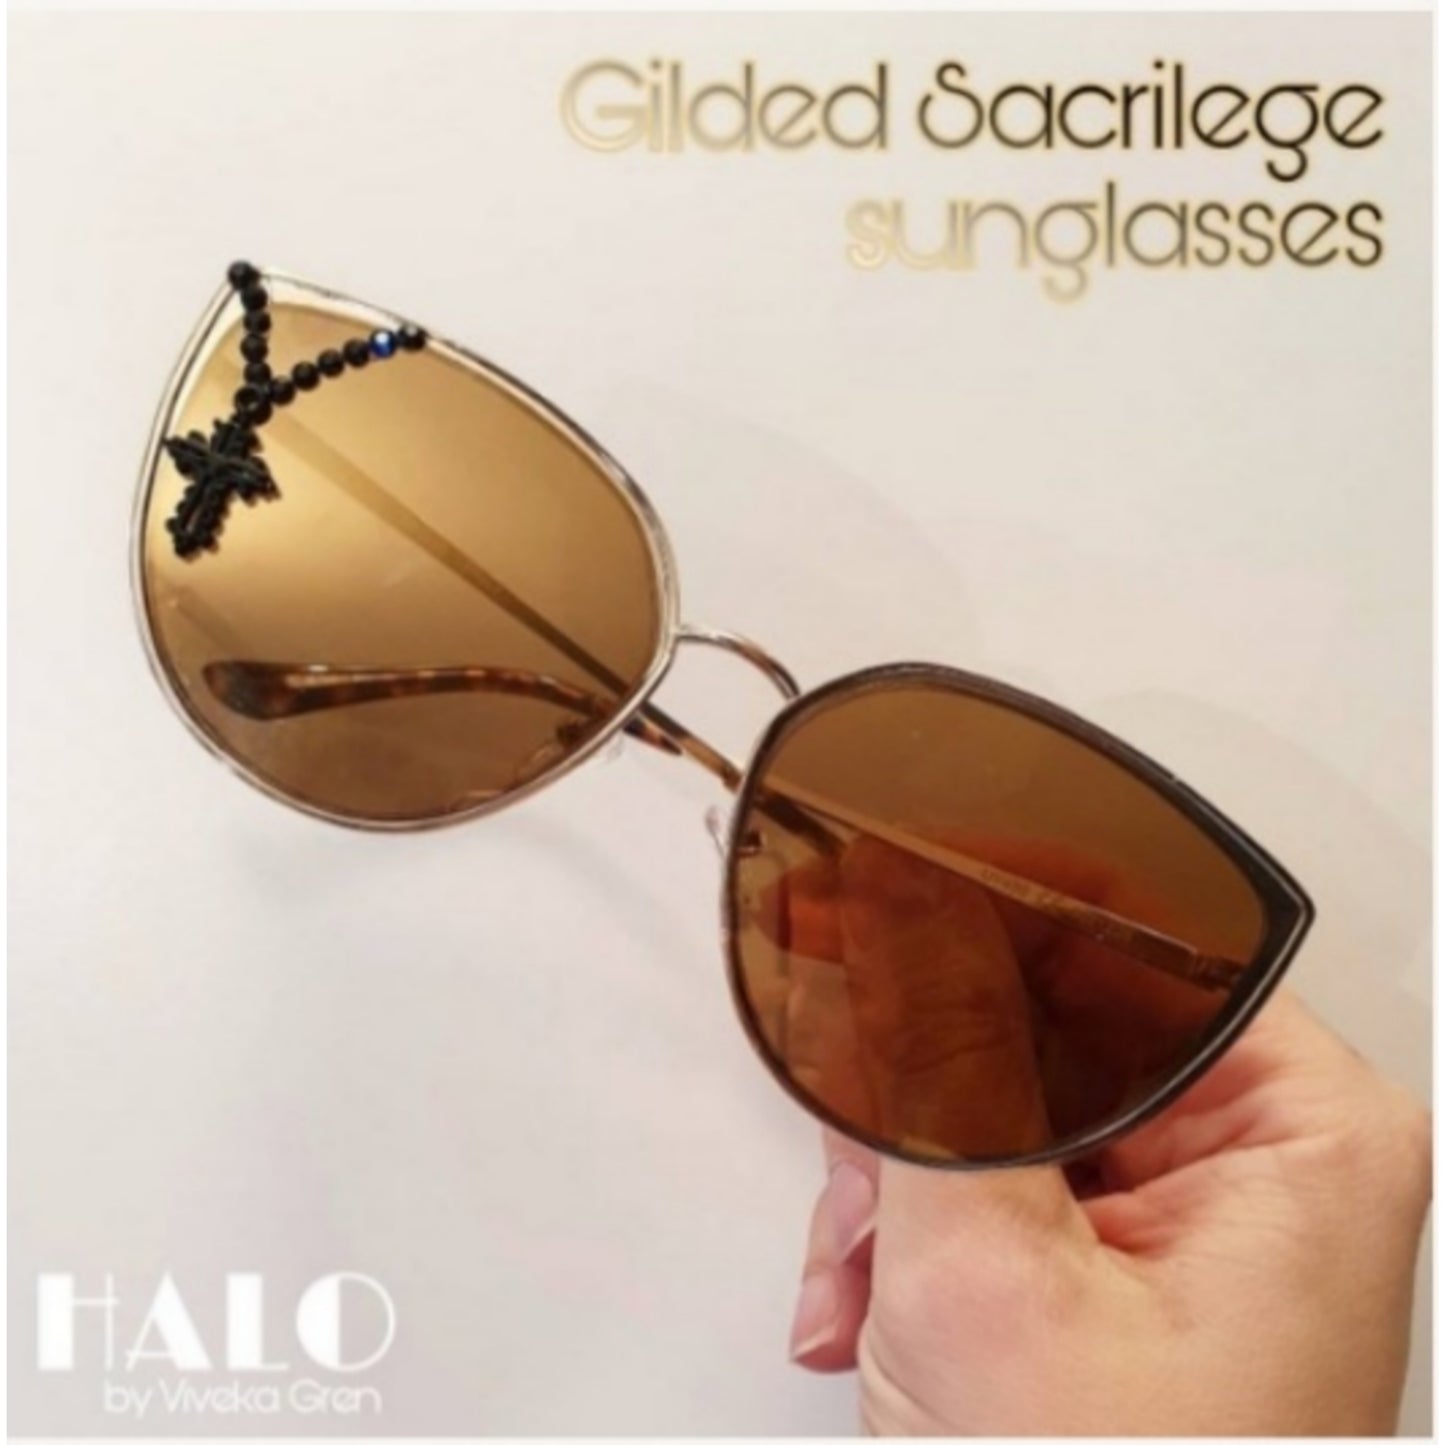 Sacrilegious Collection: The Gilded Sacrilege sunglasses